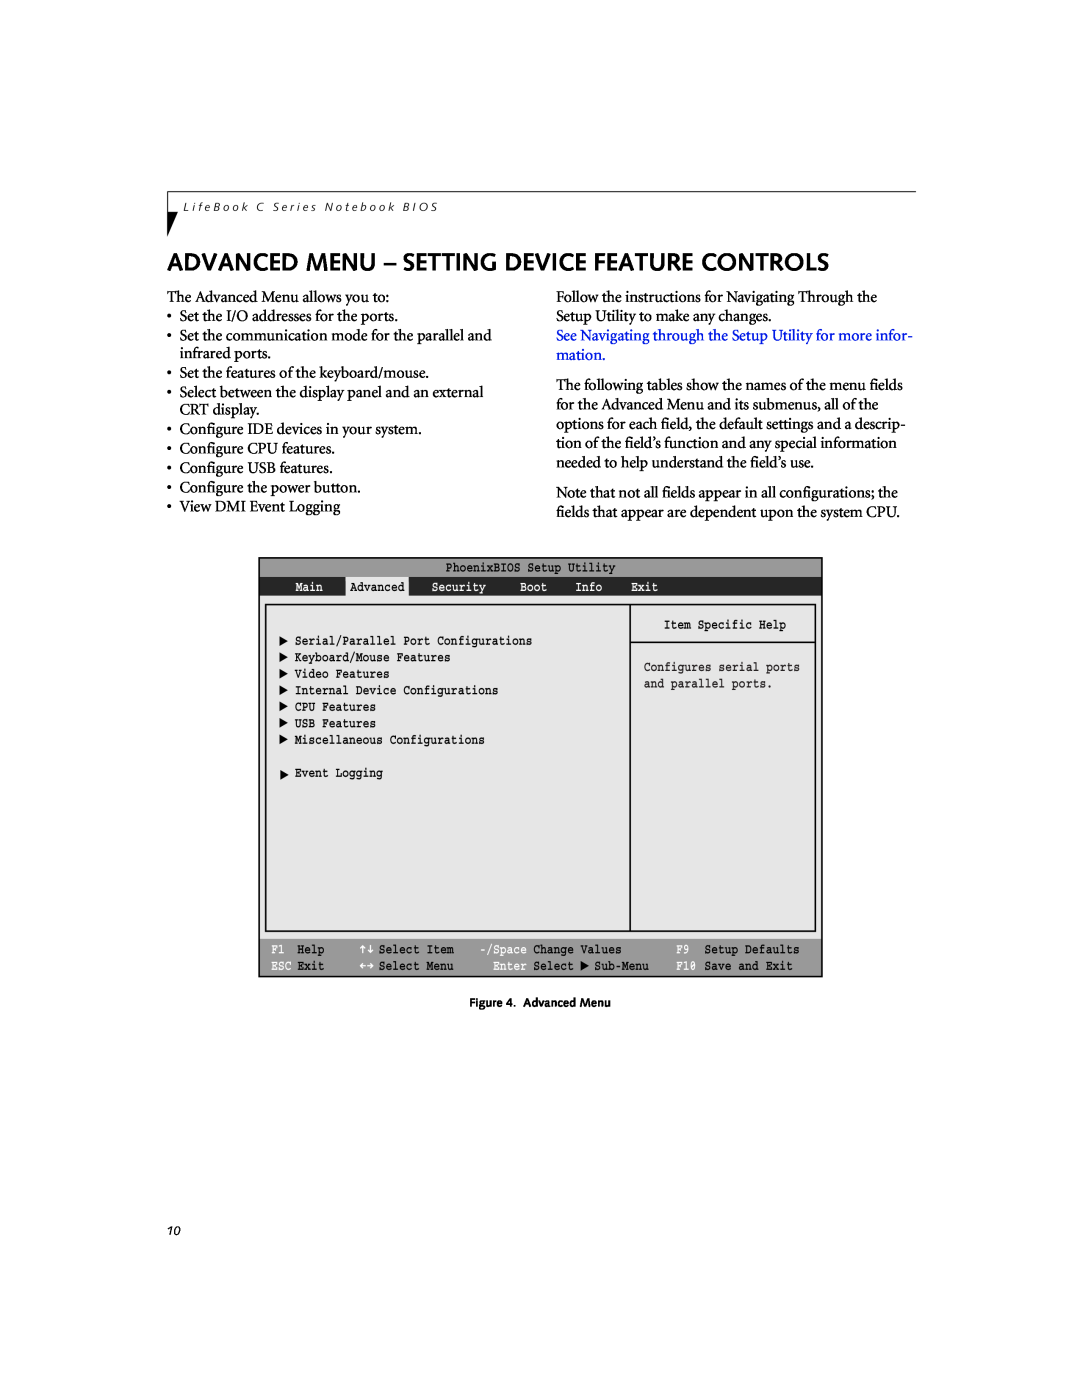 Fujitsu C2330 manual Advanced Menu - Setting Device Feature Controls 